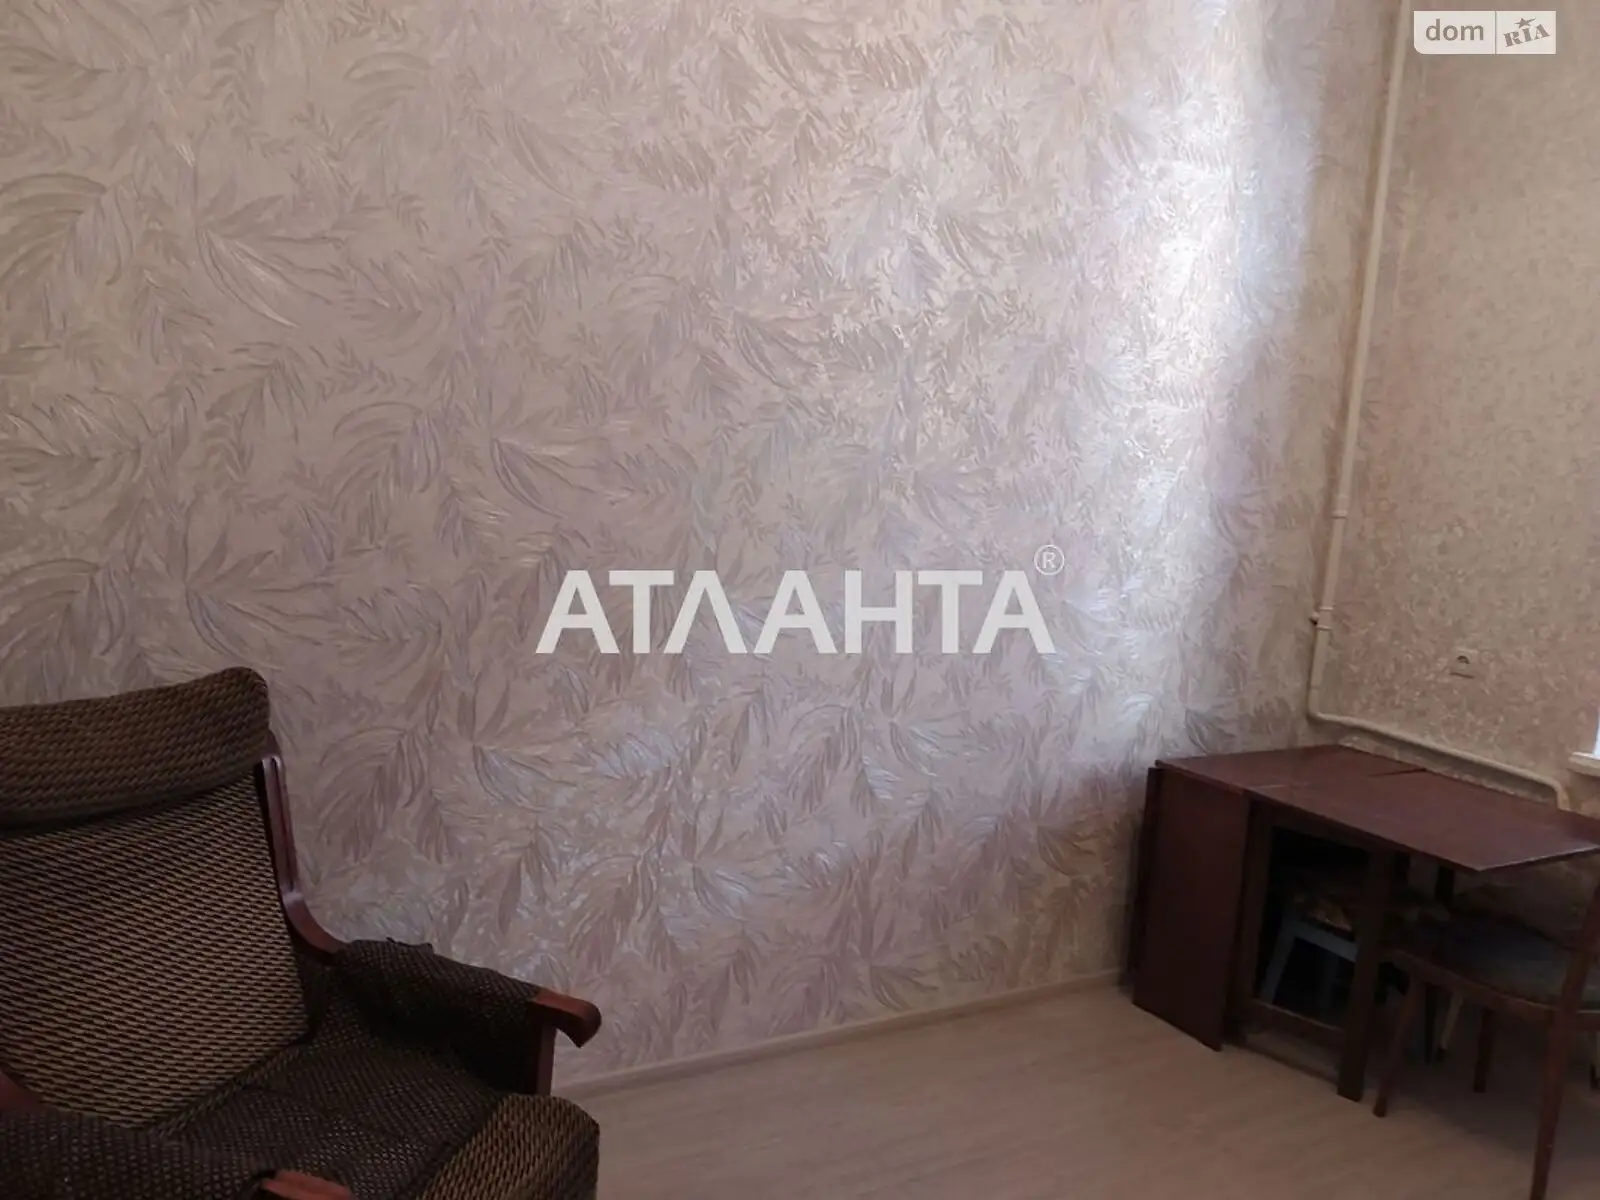 Продается комната 12.7 кв. м в Одессе, цена: 14000 $ - фото 1